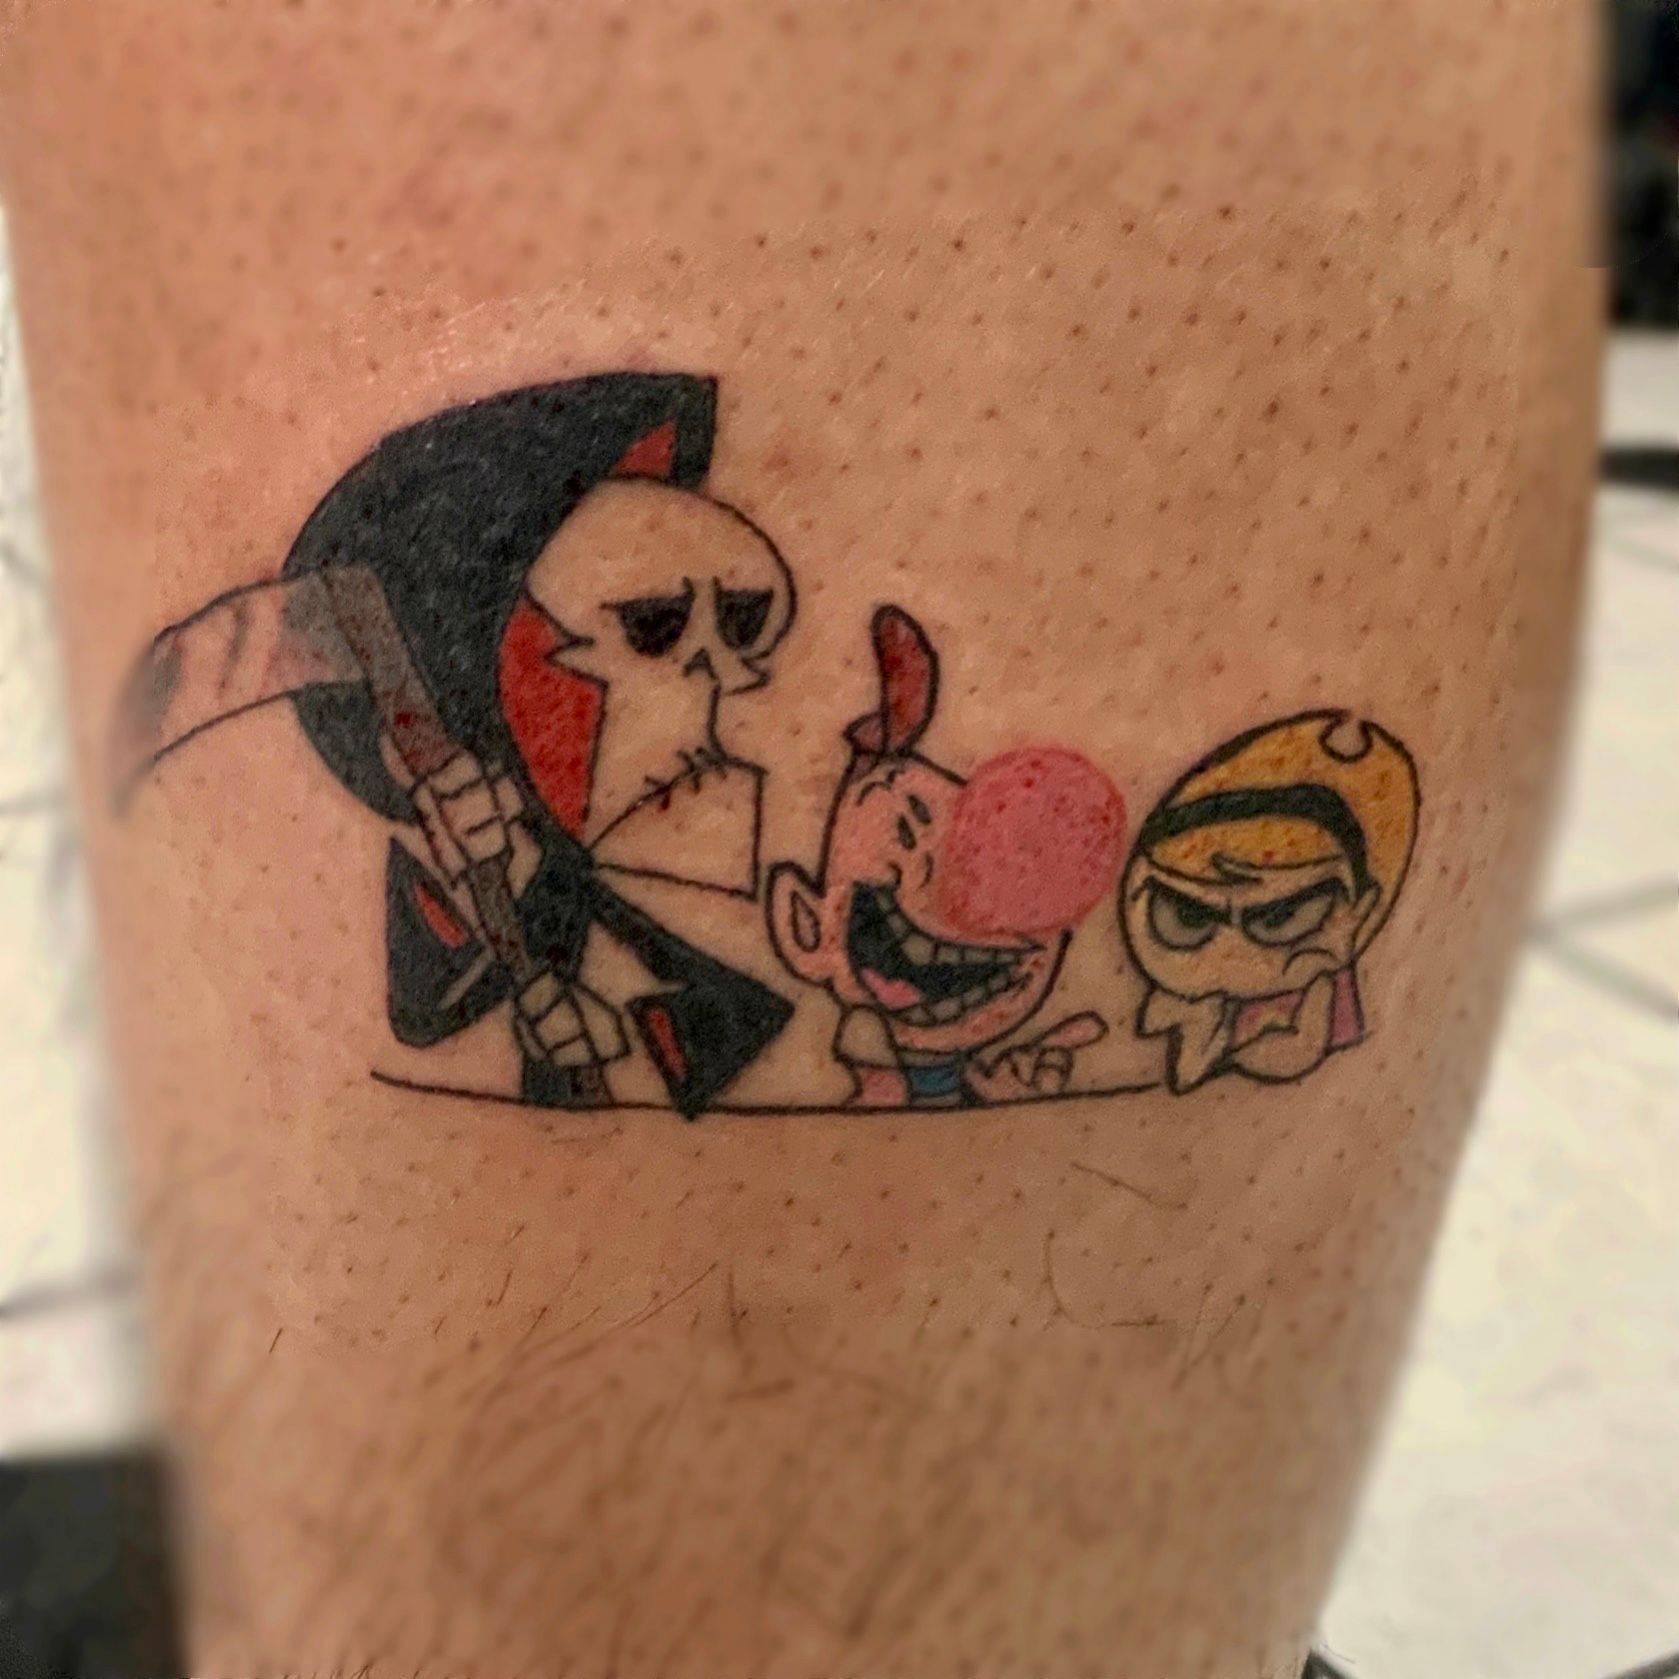 Billy and mandy grim tattoo